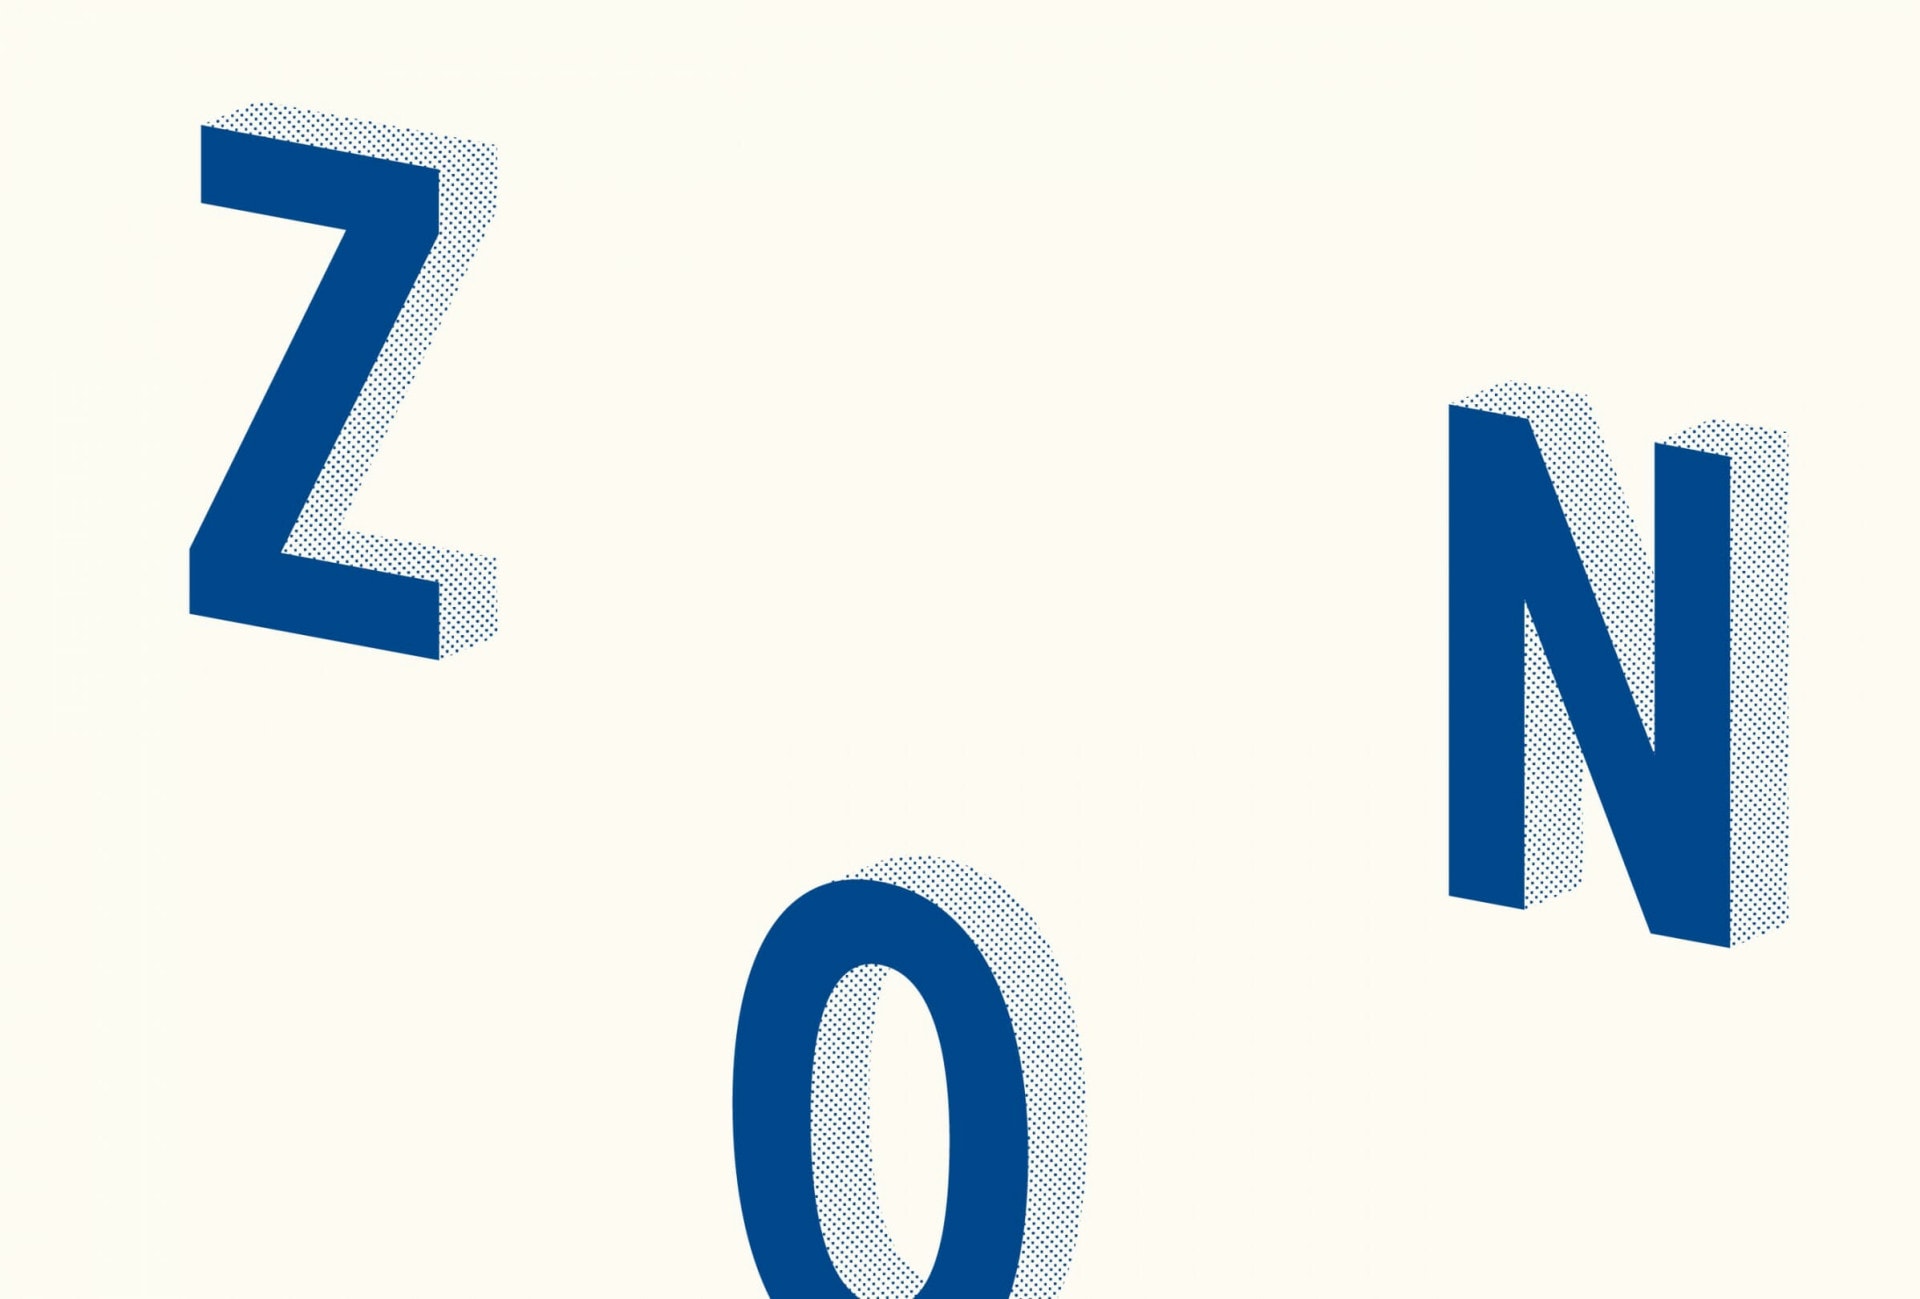 Birra Zonzo Packaging Design, Illustration and Brand Identity